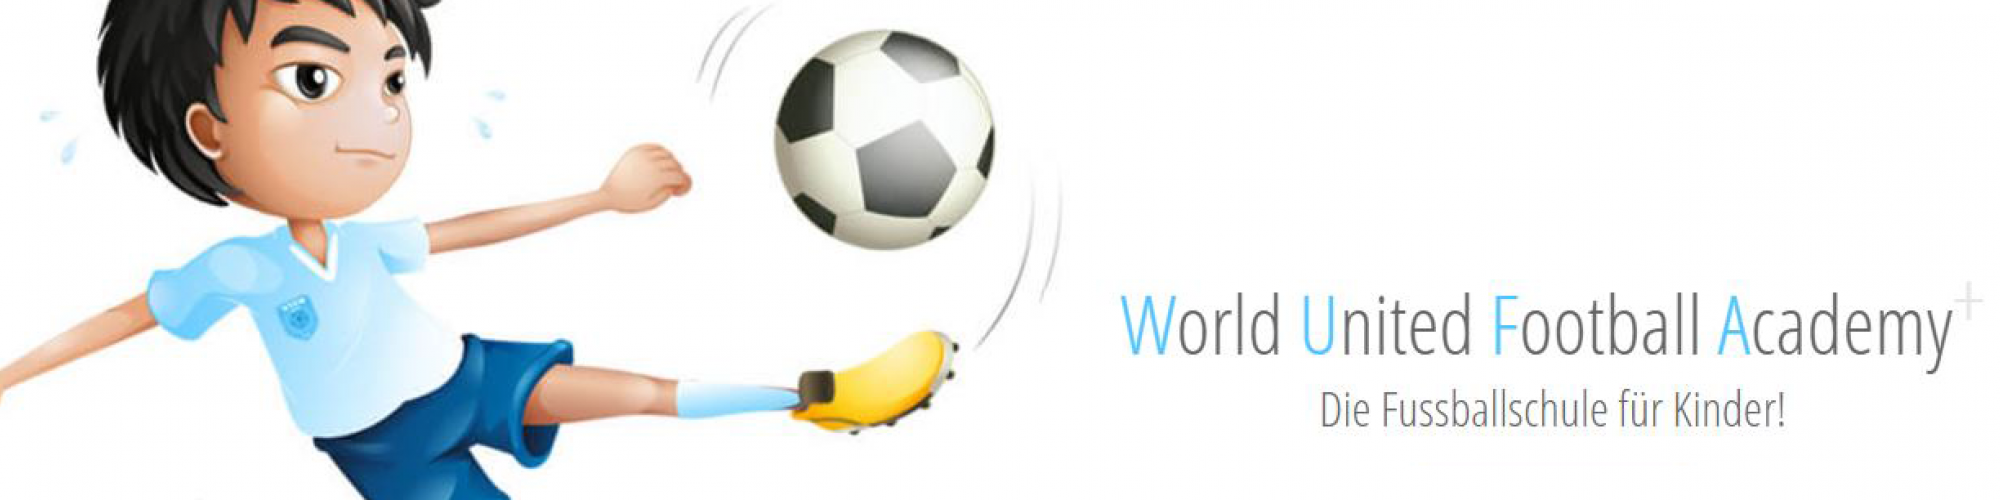 World United Football Academy